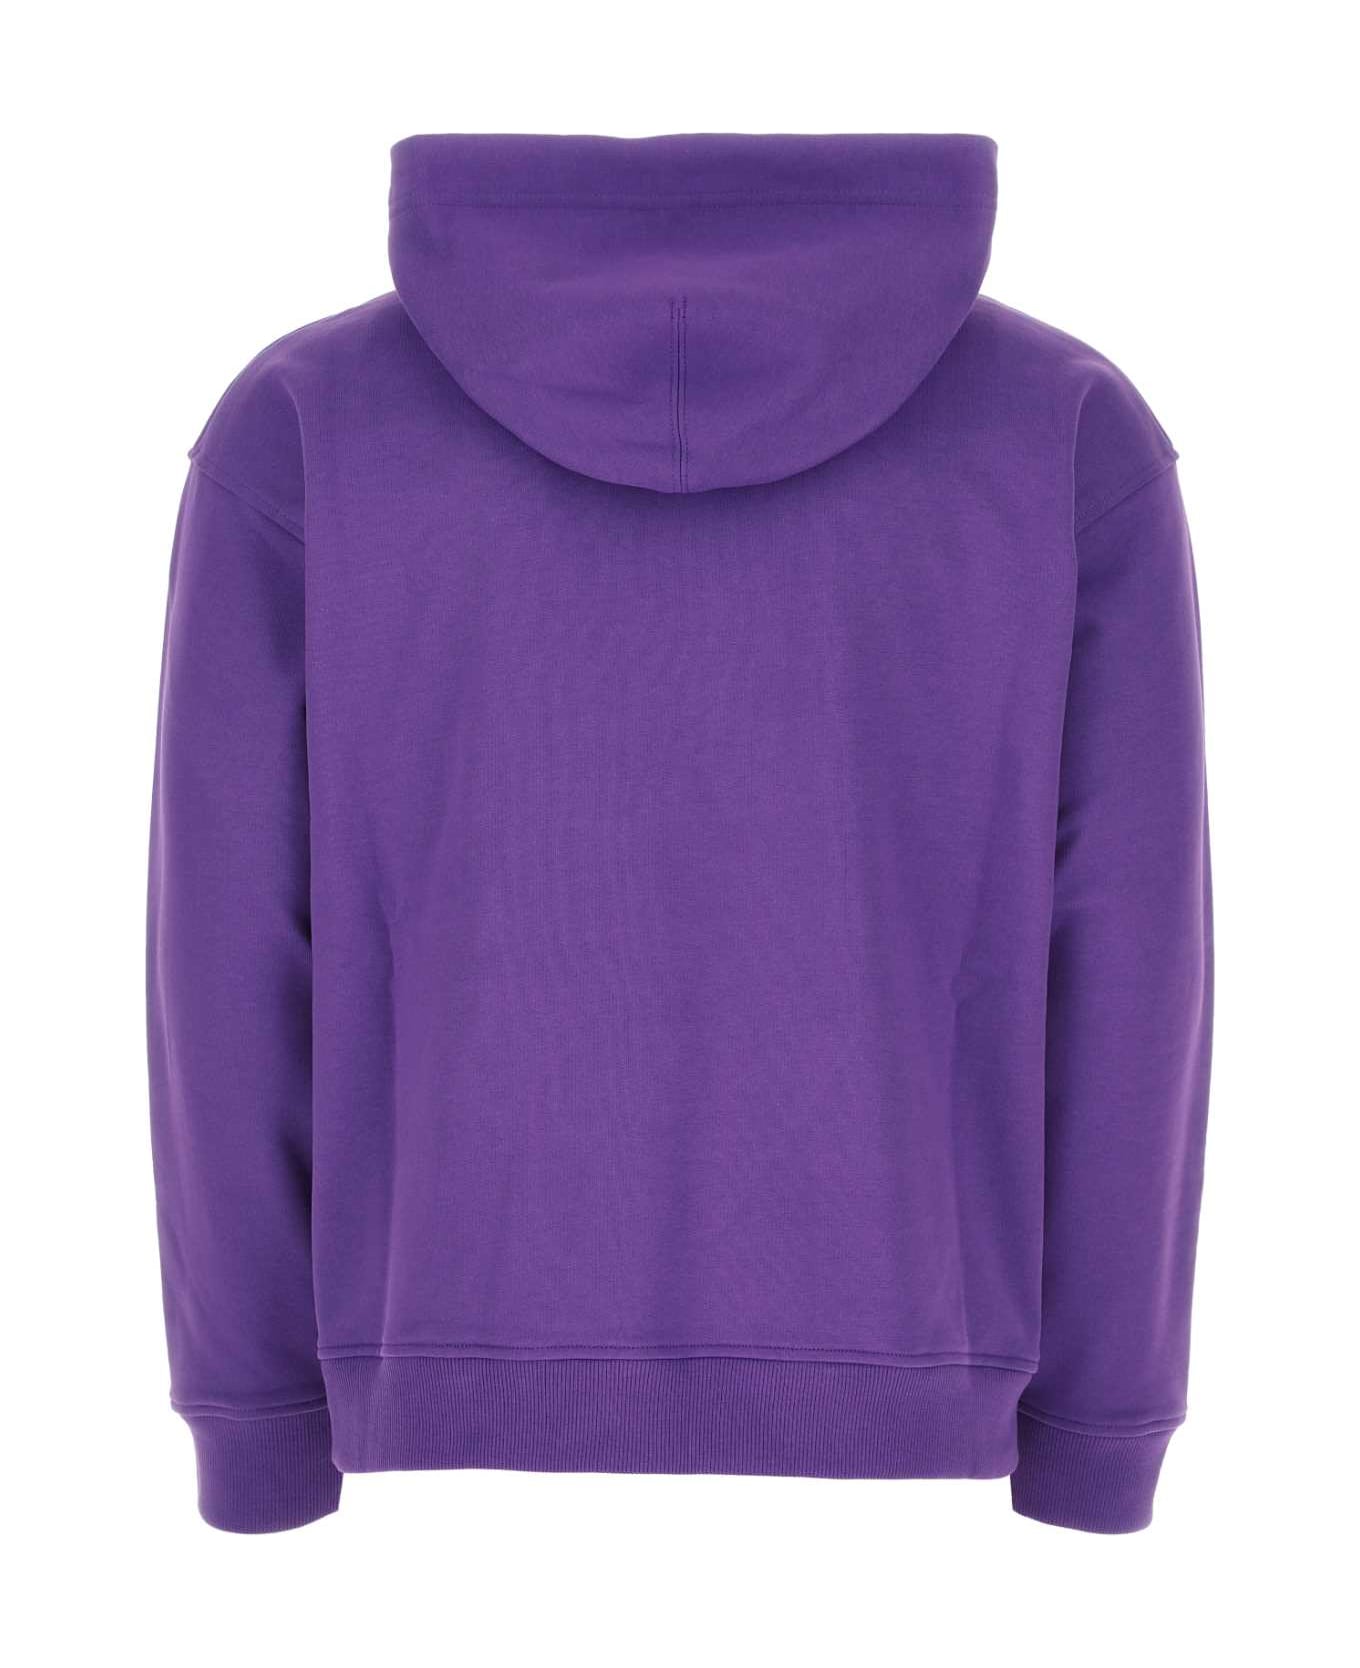 Valentino Garavani Purple Cotton Sweatshirt - U15